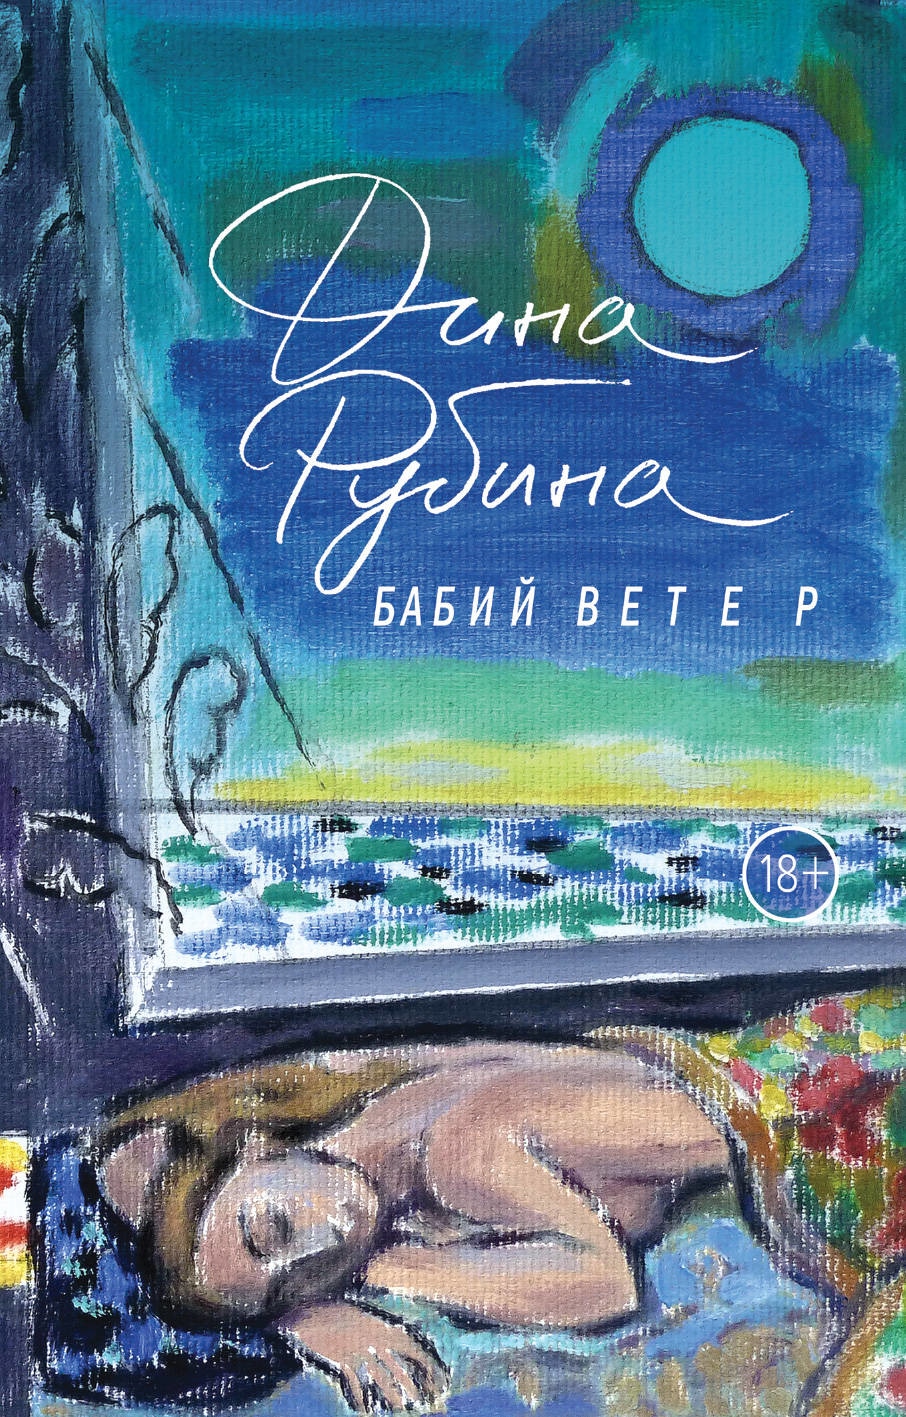 Book “Бабий ветер” by Дина Рубина — February 3, 2020